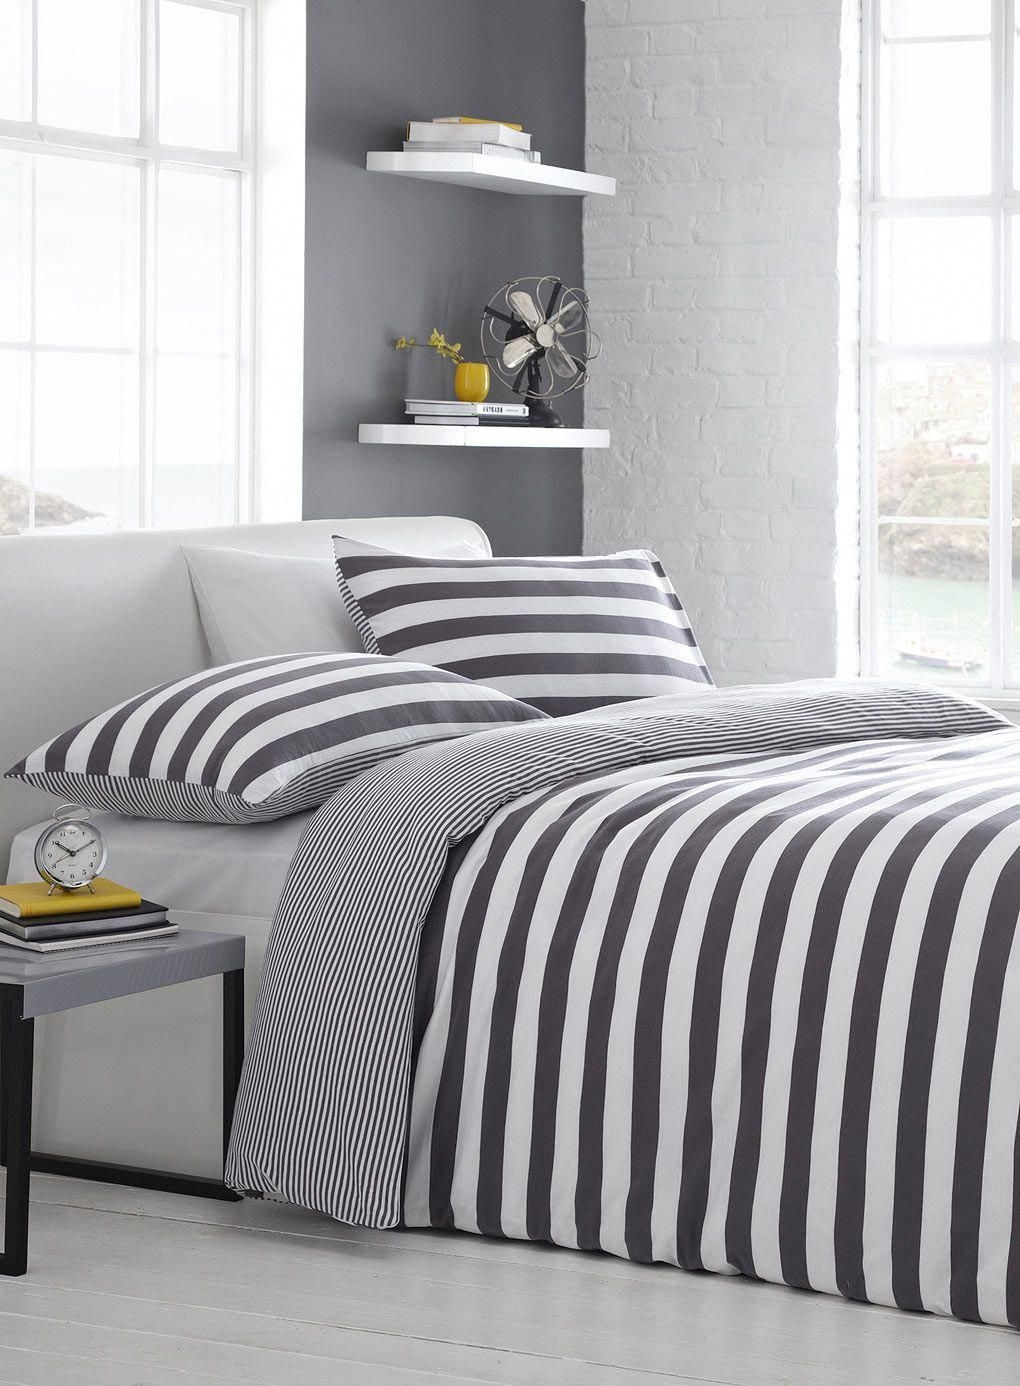 Black white striped comforter